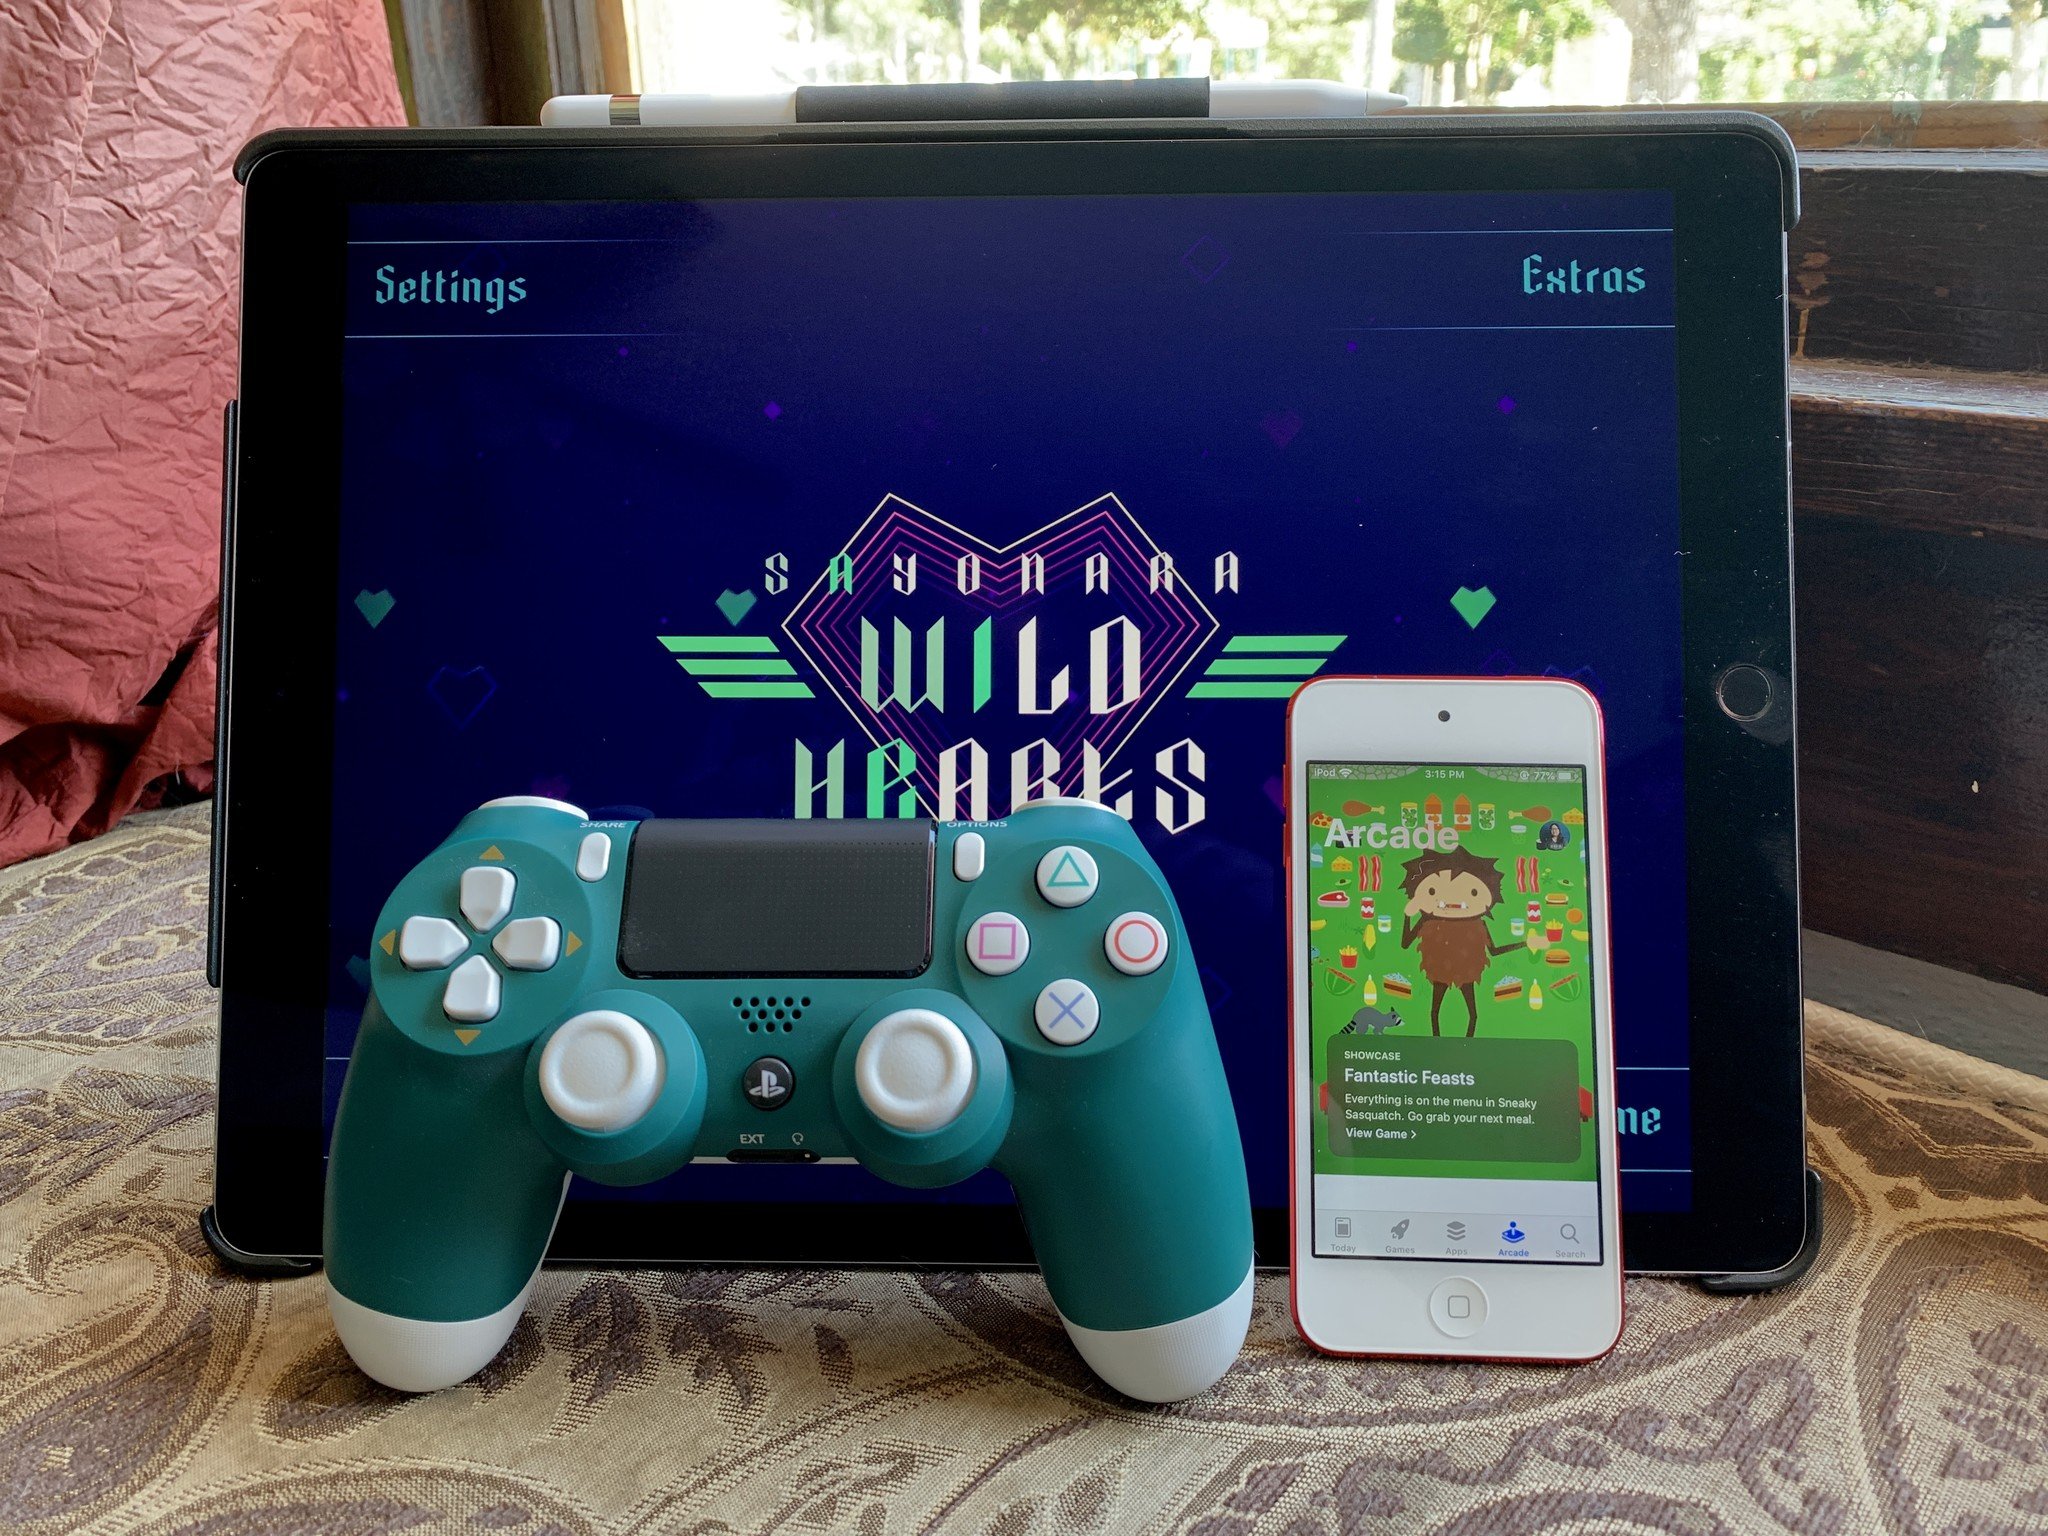 Sayonara Wild Hearts and Apple Arcade with a DualShock 4 controller